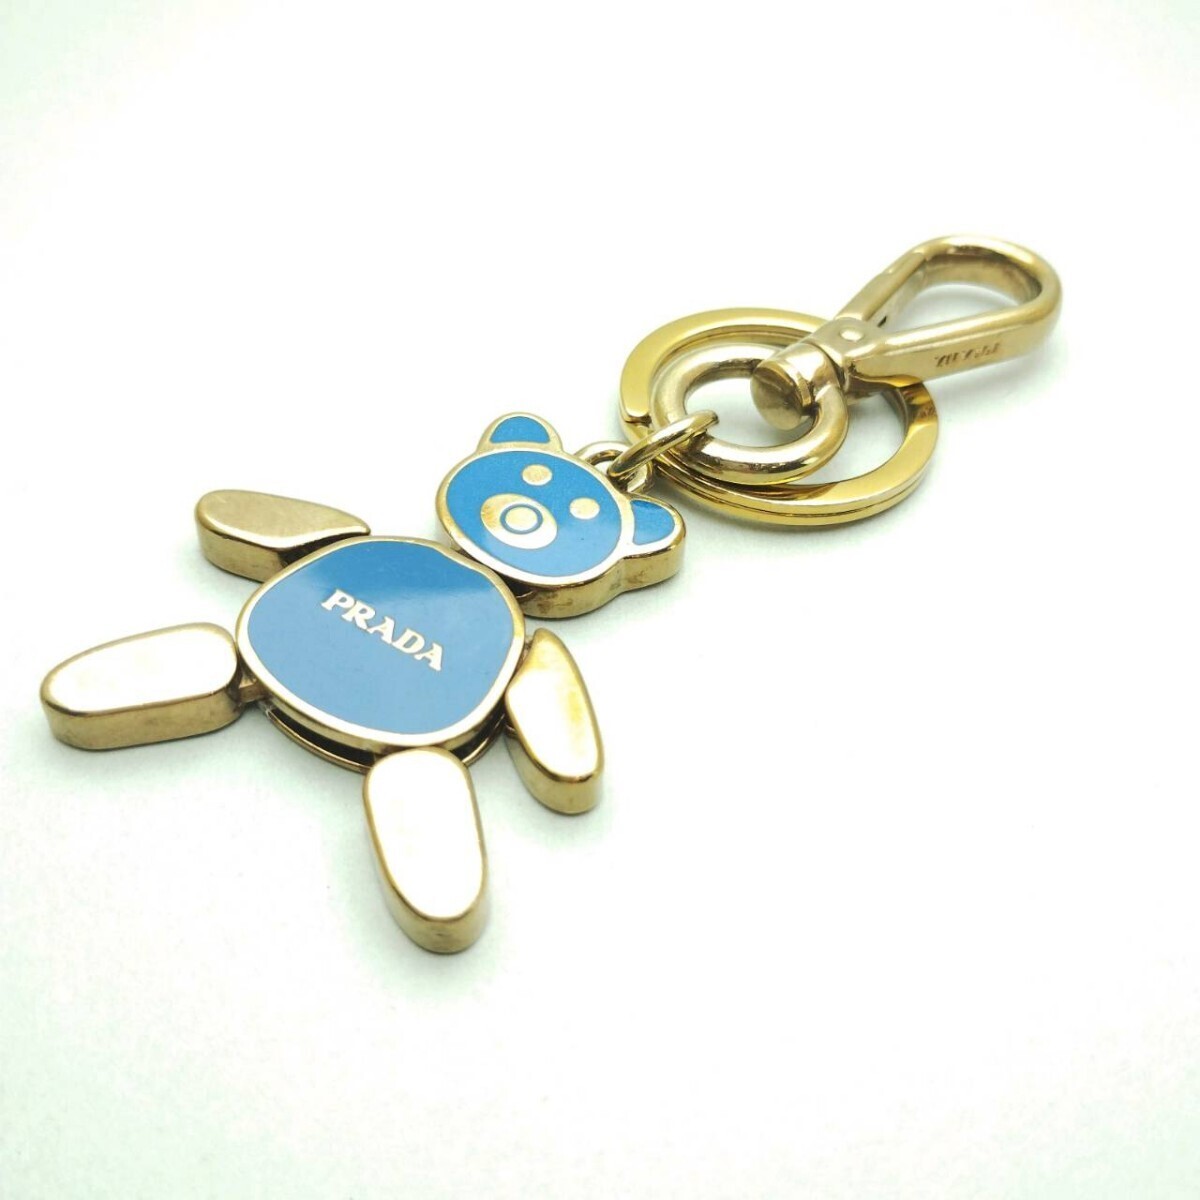  Prada charm key ring PRADA gold group Bear .. key holder accessory memory 3